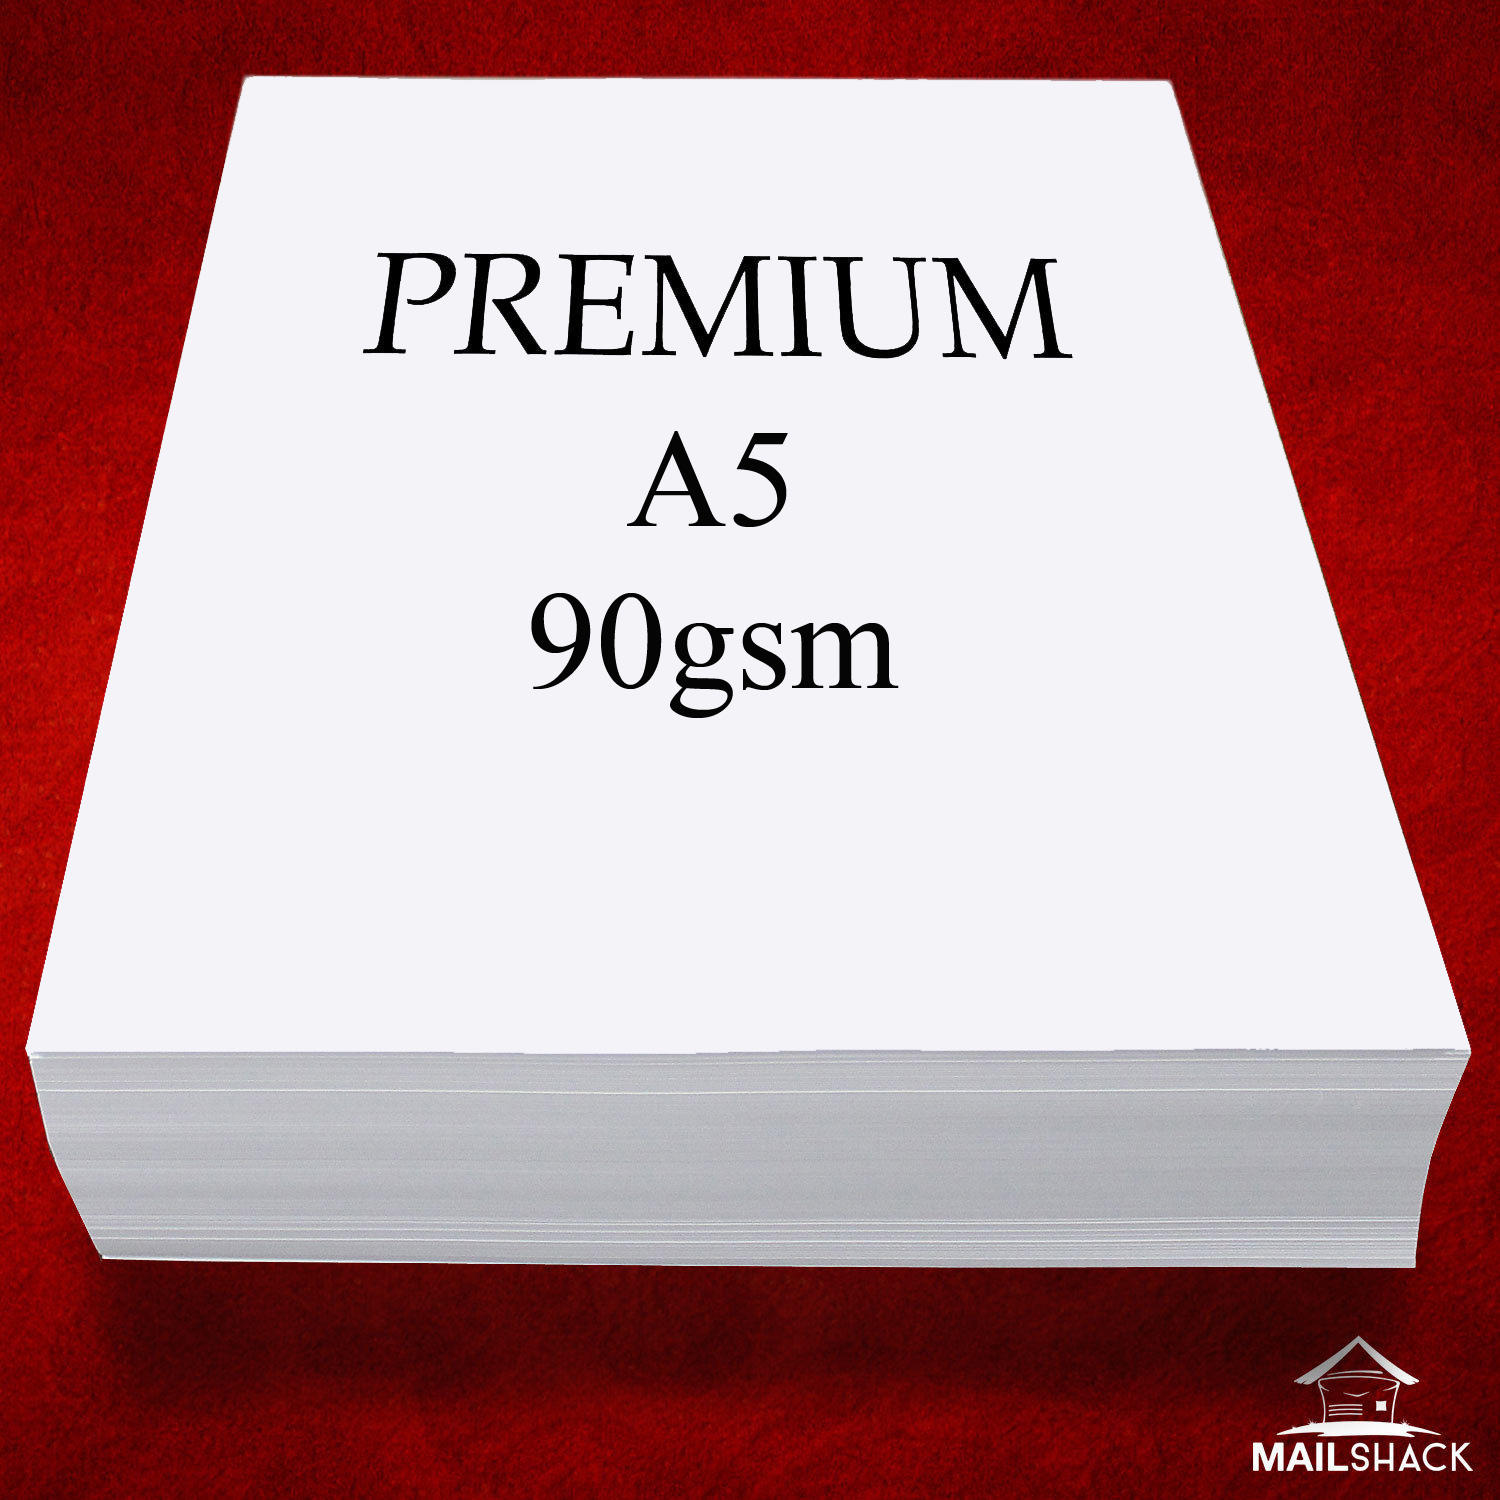 A5 PREMIUM 90gsm, ULTRA WHITE Paper MAGNO, Copier Printer High Quality